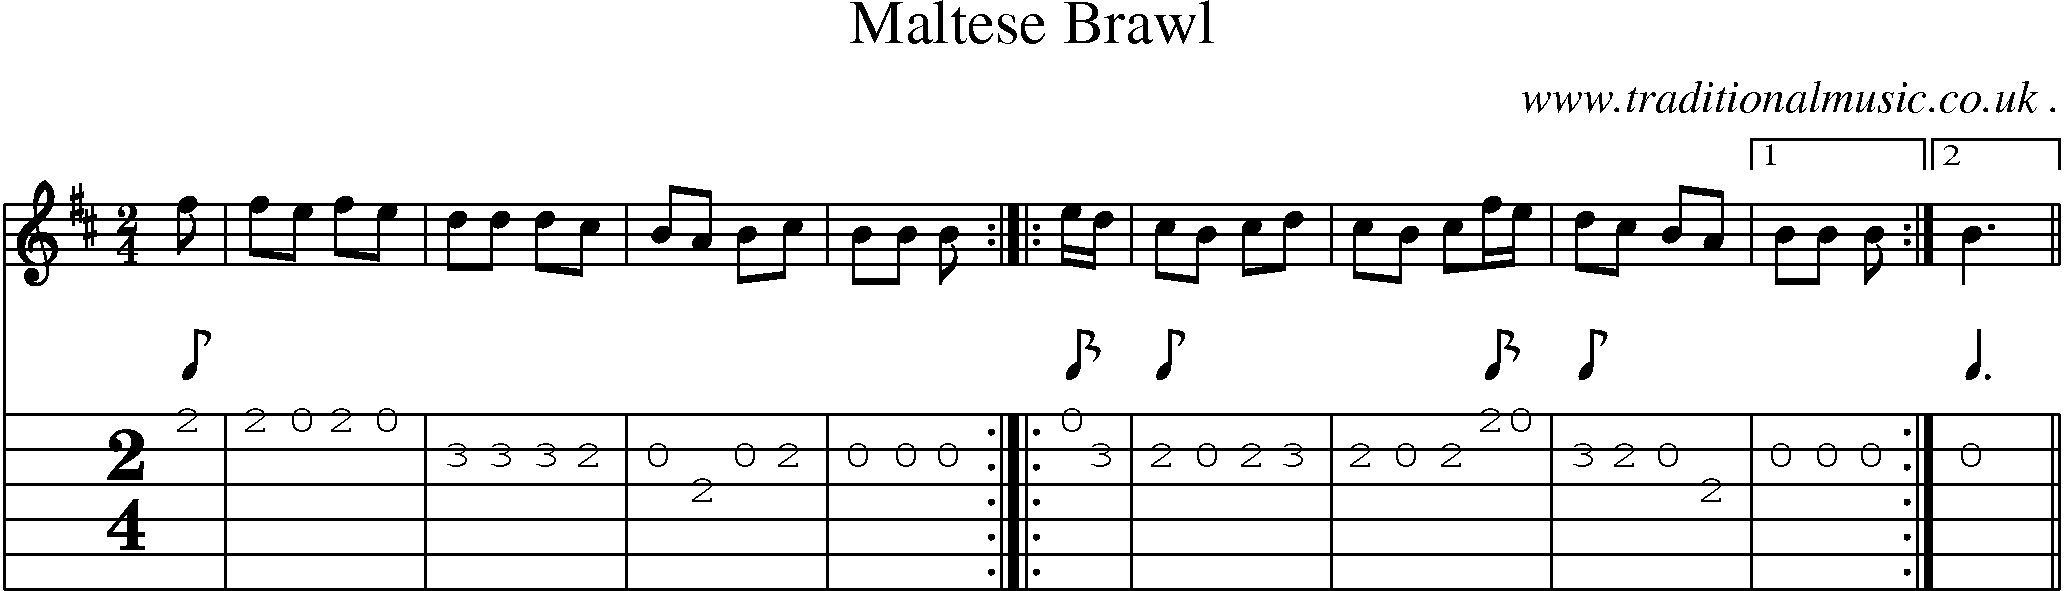 Sheet-Music and Guitar Tabs for Maltese Brawl